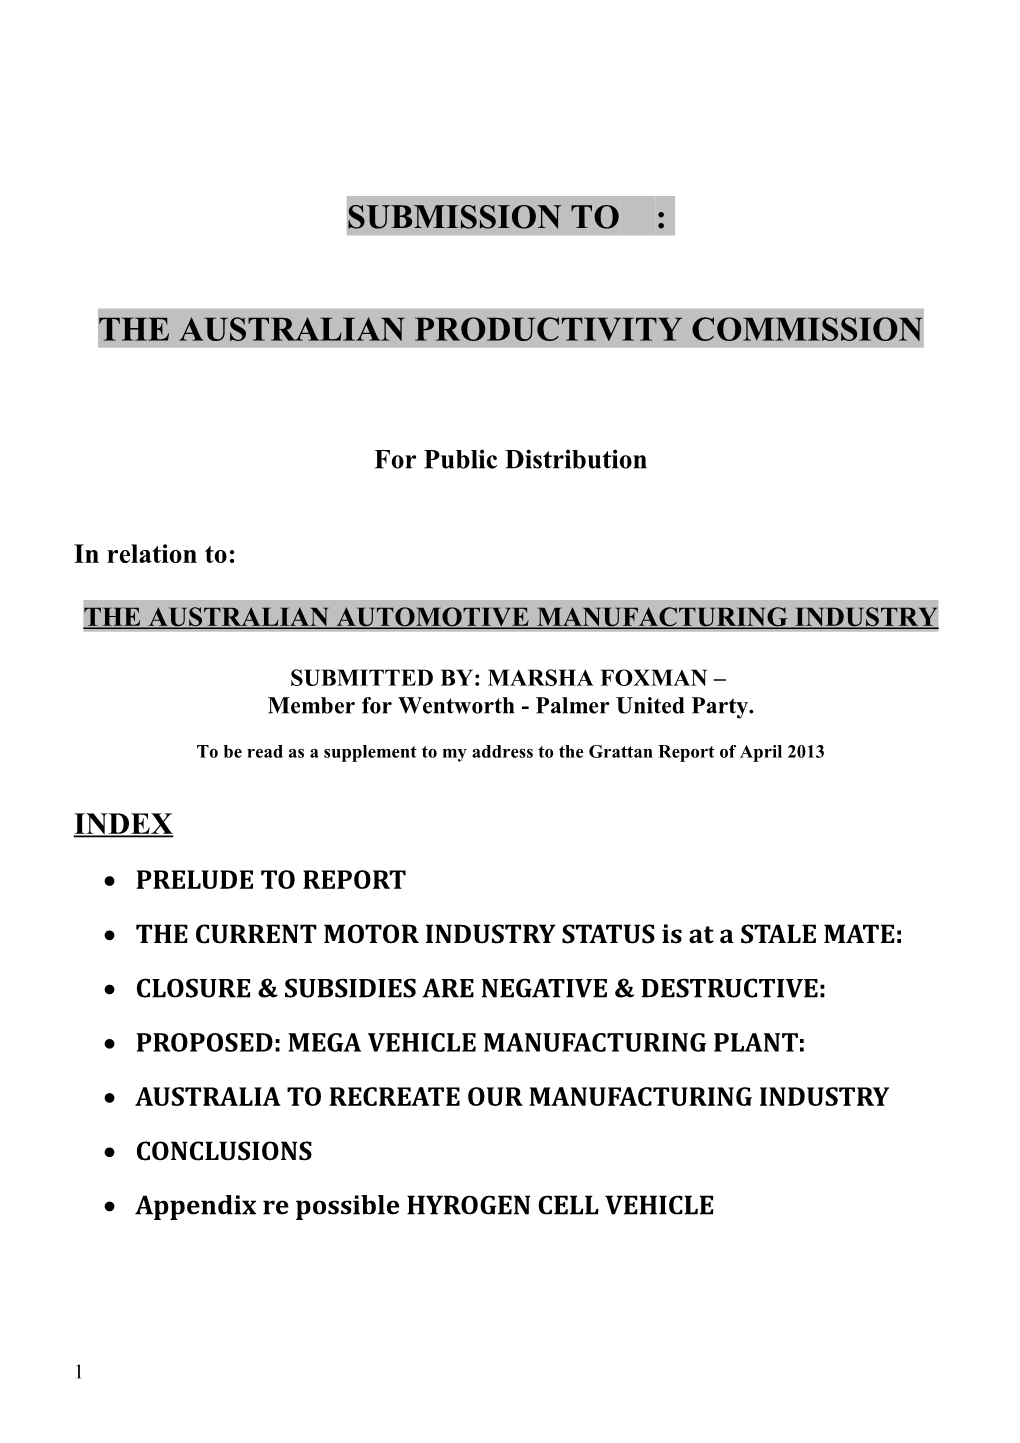 Submission PFR231 - Marsha Foxman - Australia's Automotive Manufacturing Industry - Public